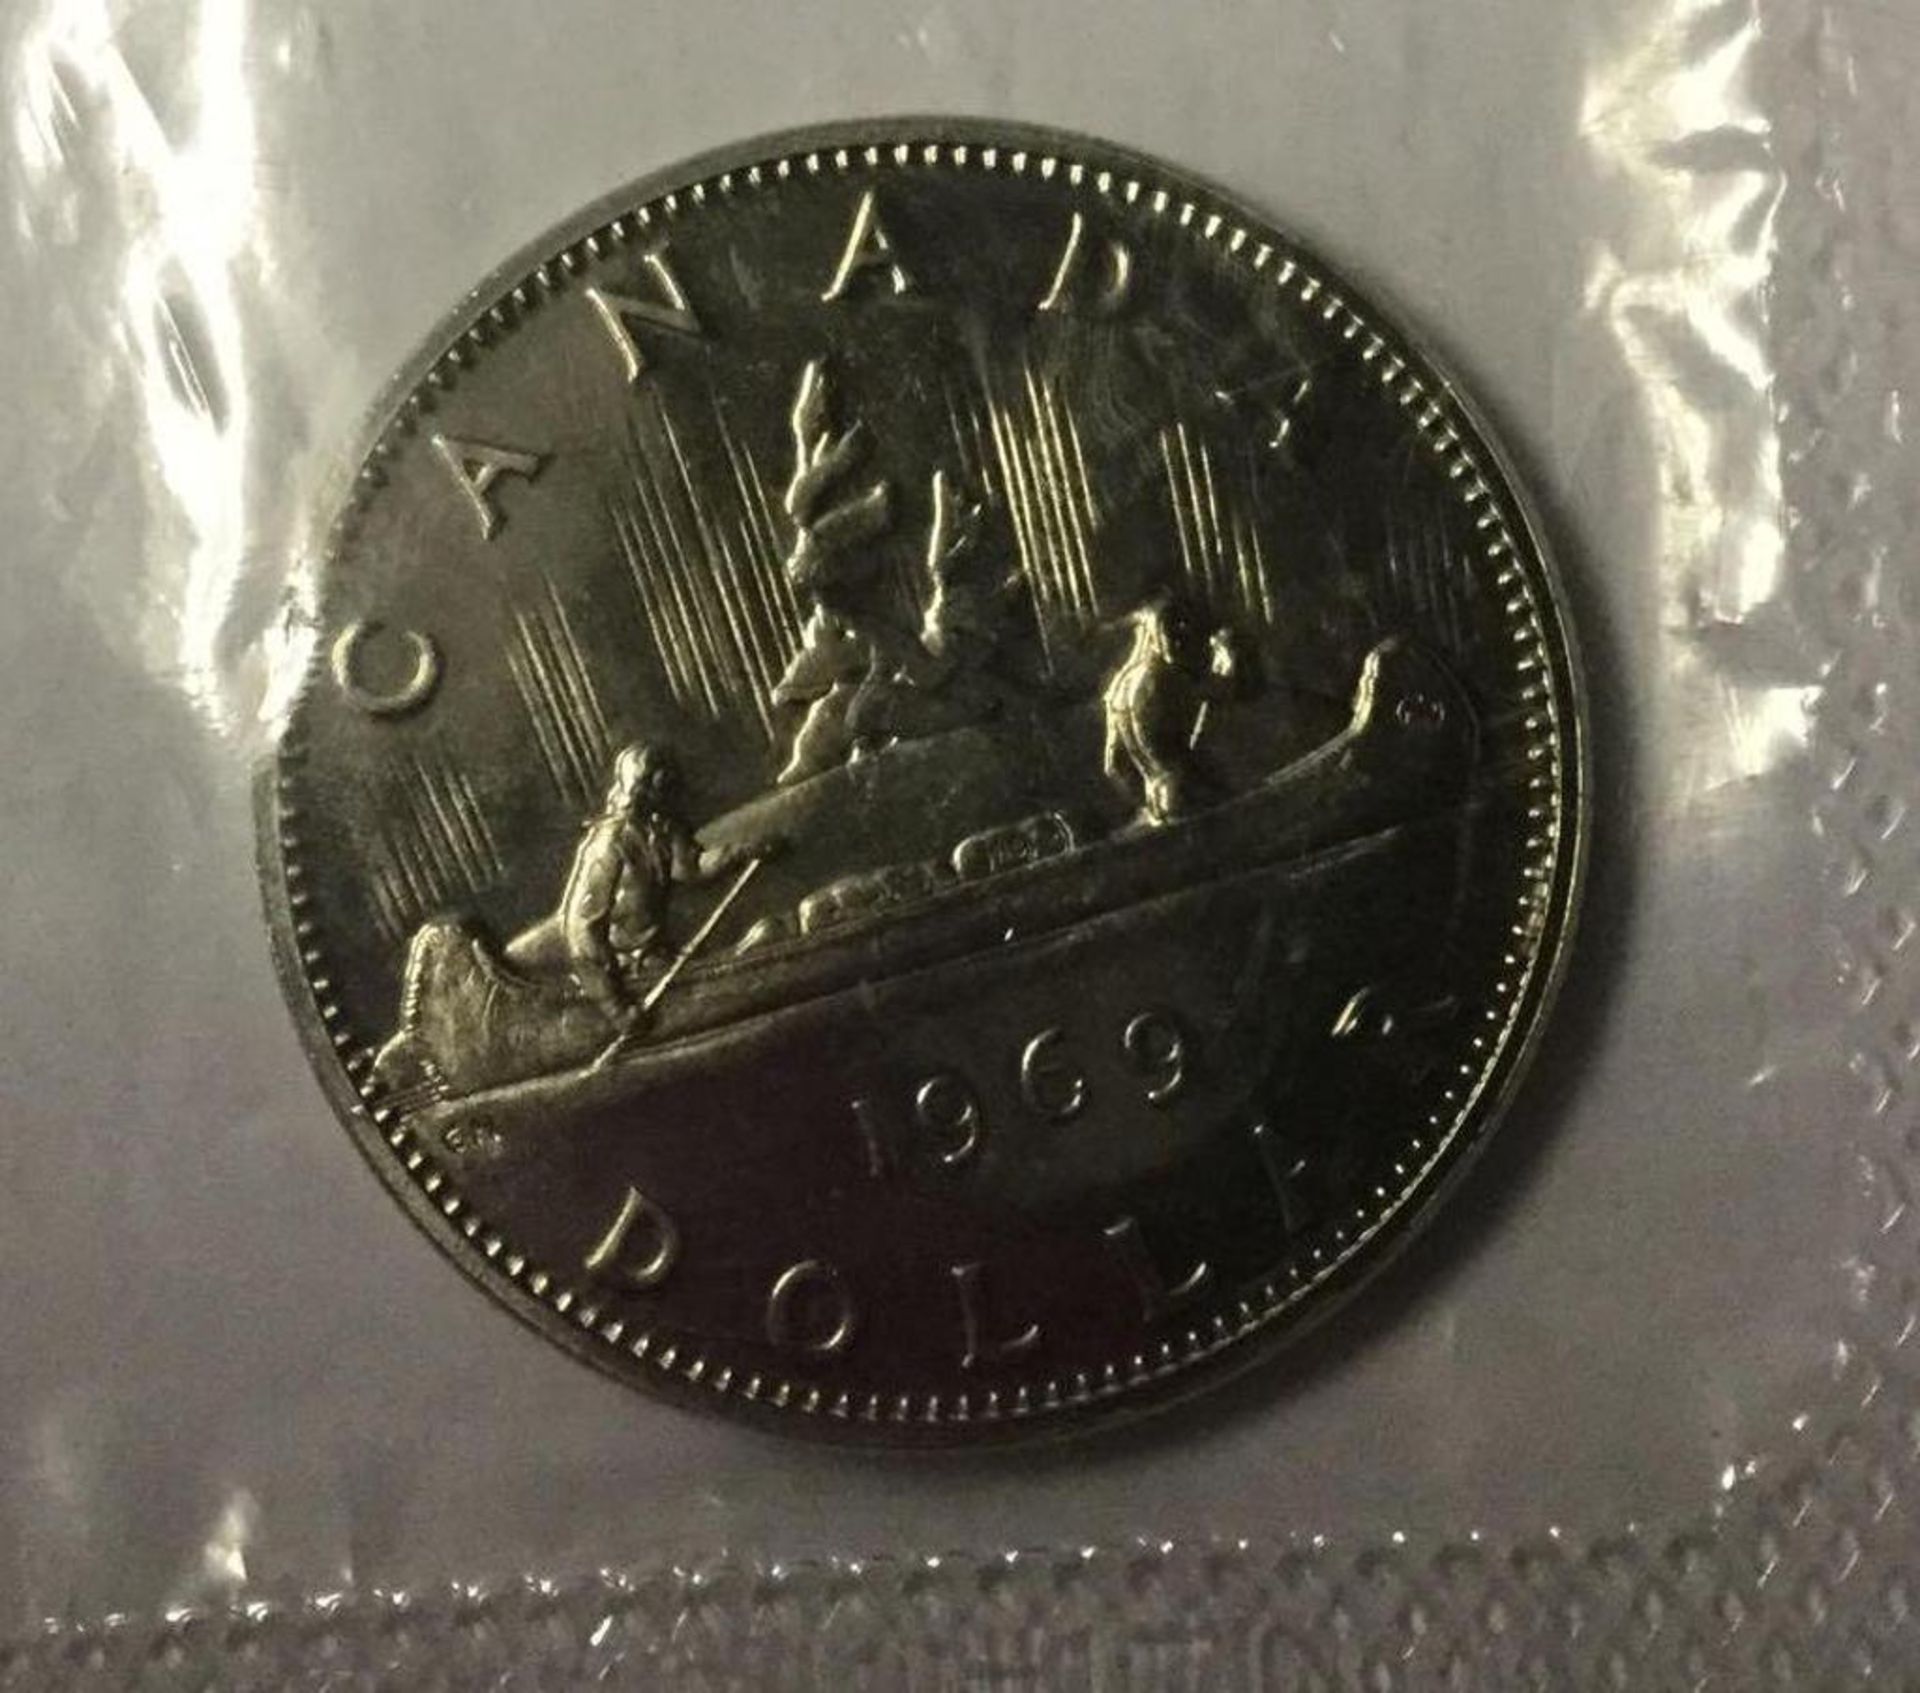 1969 Canadian silver dollar coin